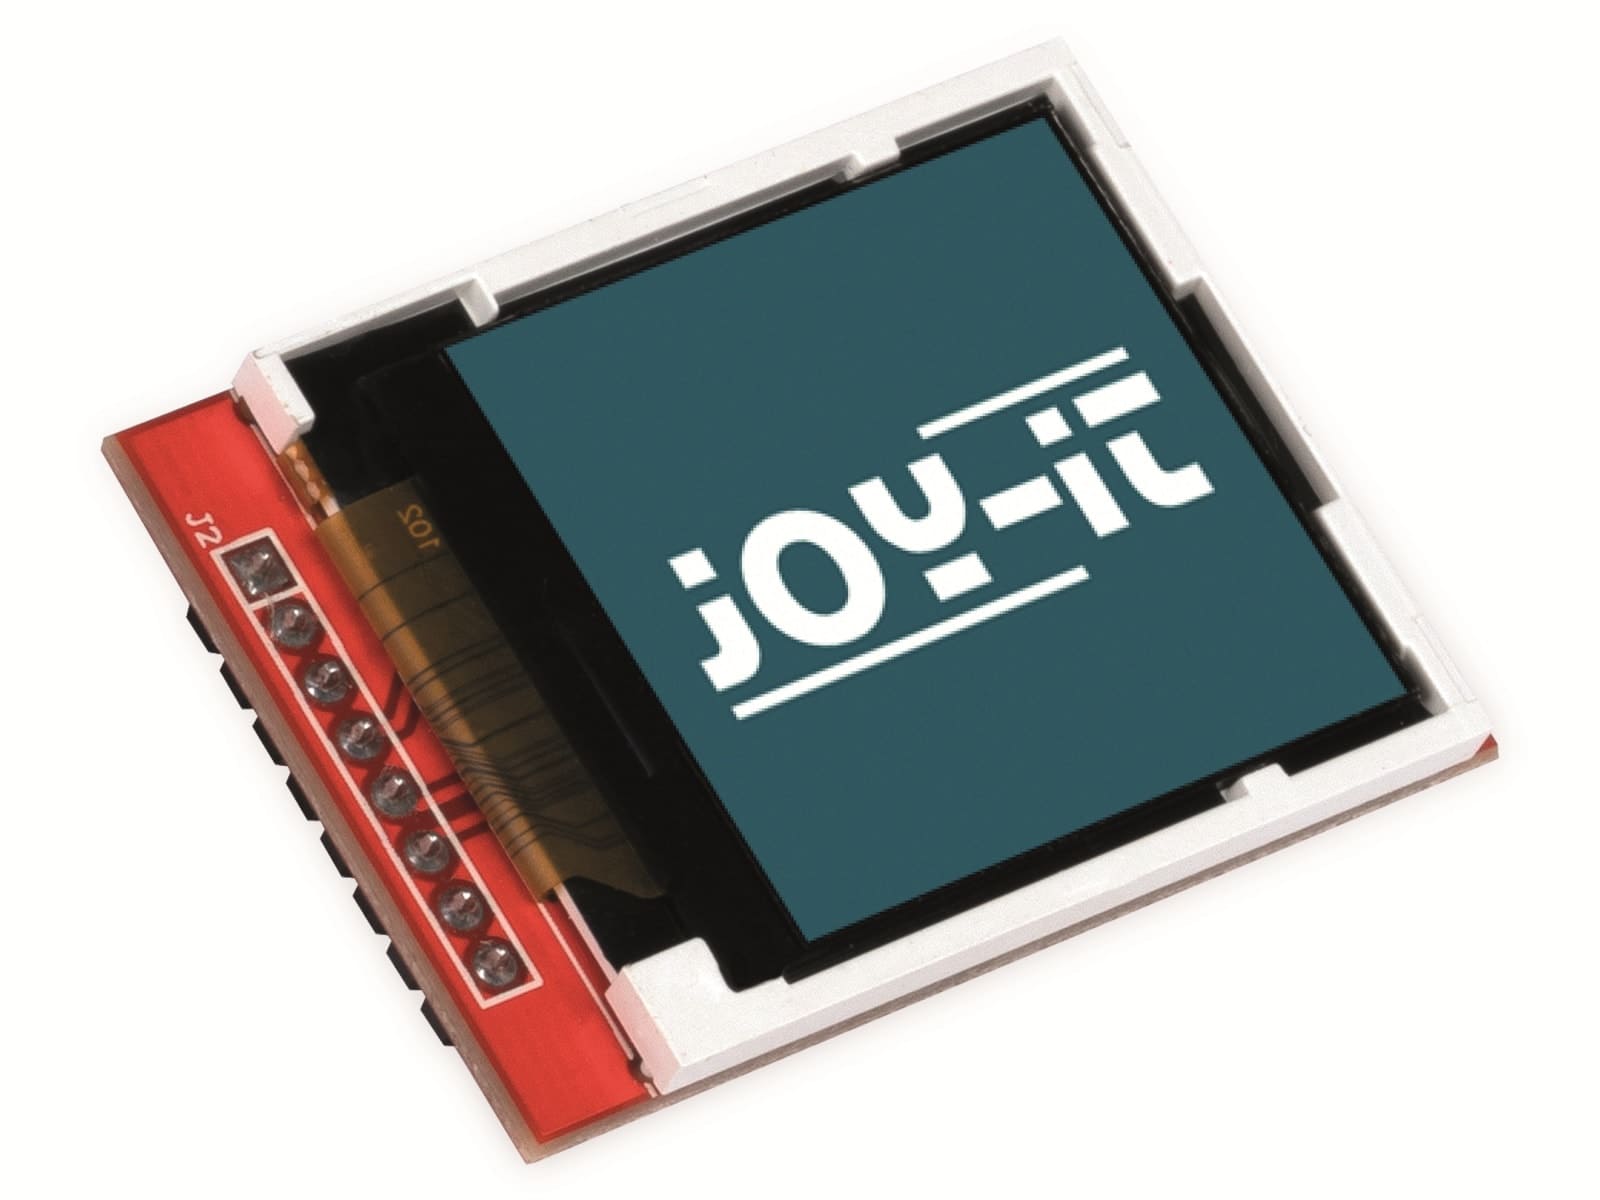 JOY-IT Display TFT, SBC-LCD02, 1.44" IPS-TFT-LCD